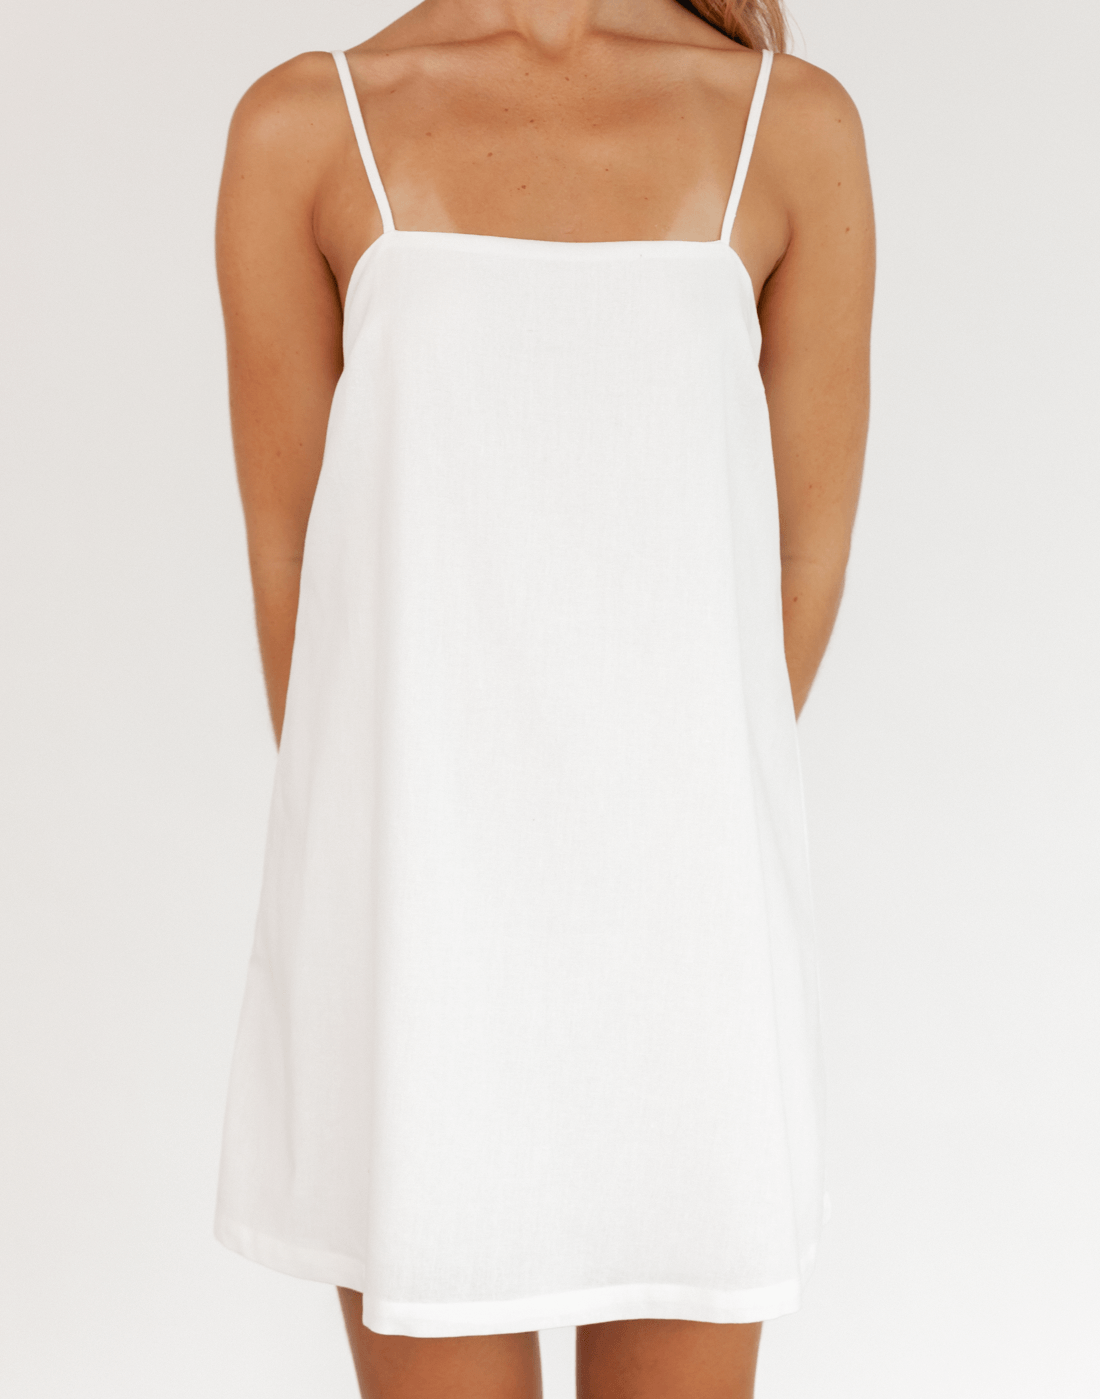 Valerie Mini Dress (White) - Spaghetti Strap Mini Dress - Women's Dress - Charcoal Clothing